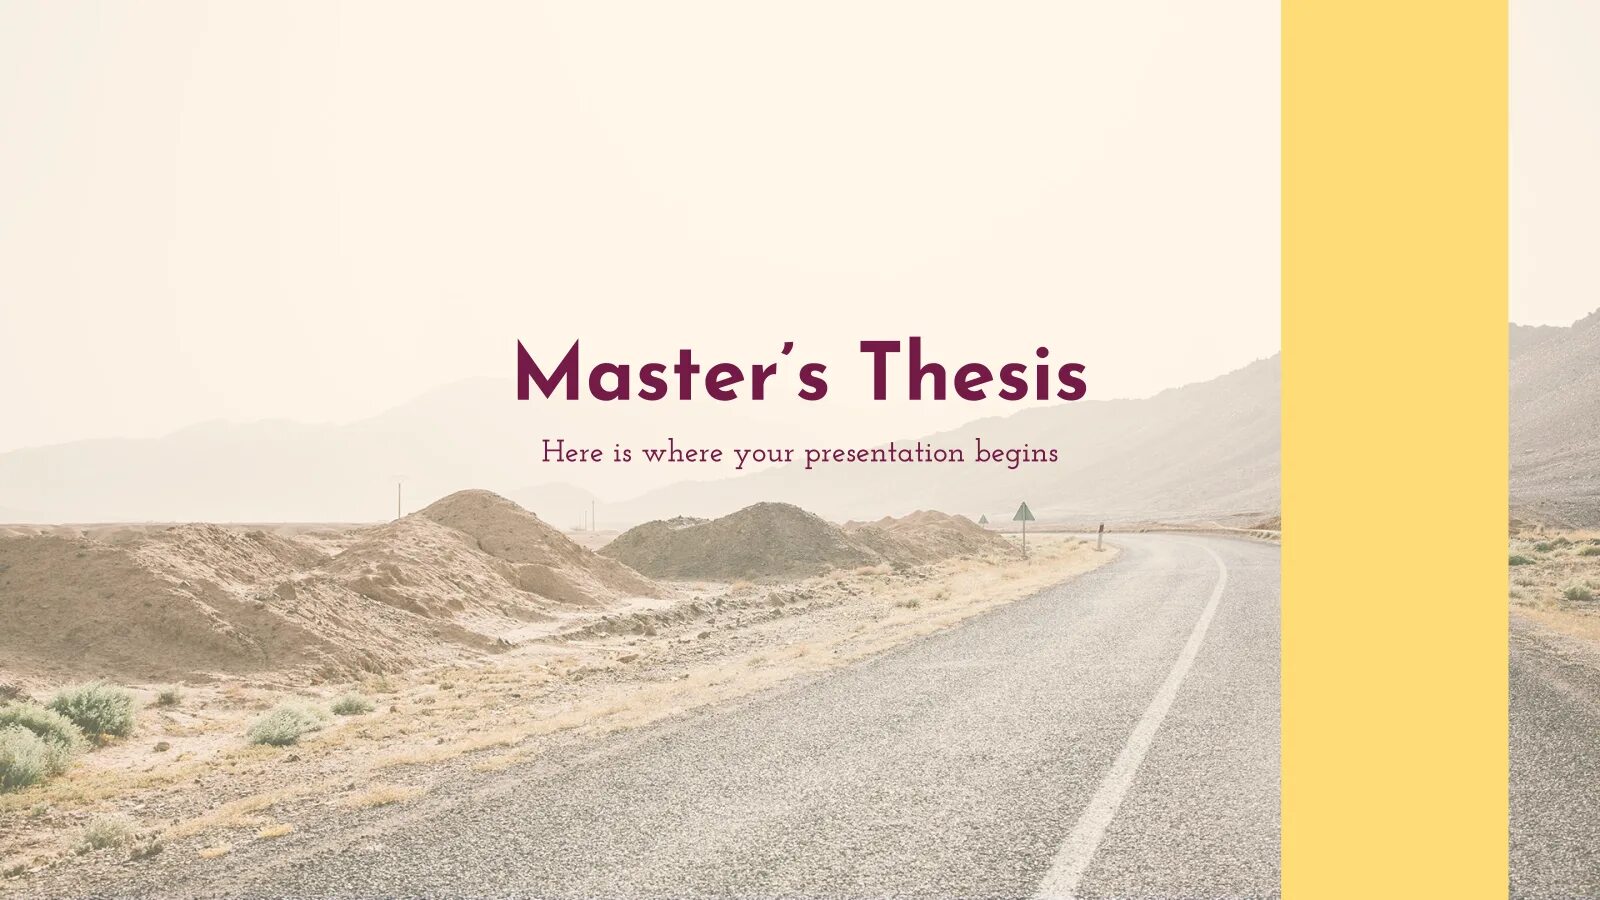 Master thesis. Thesis presentation. Presentation Defence. How to make a presentation for Defence. Presentation beginning.